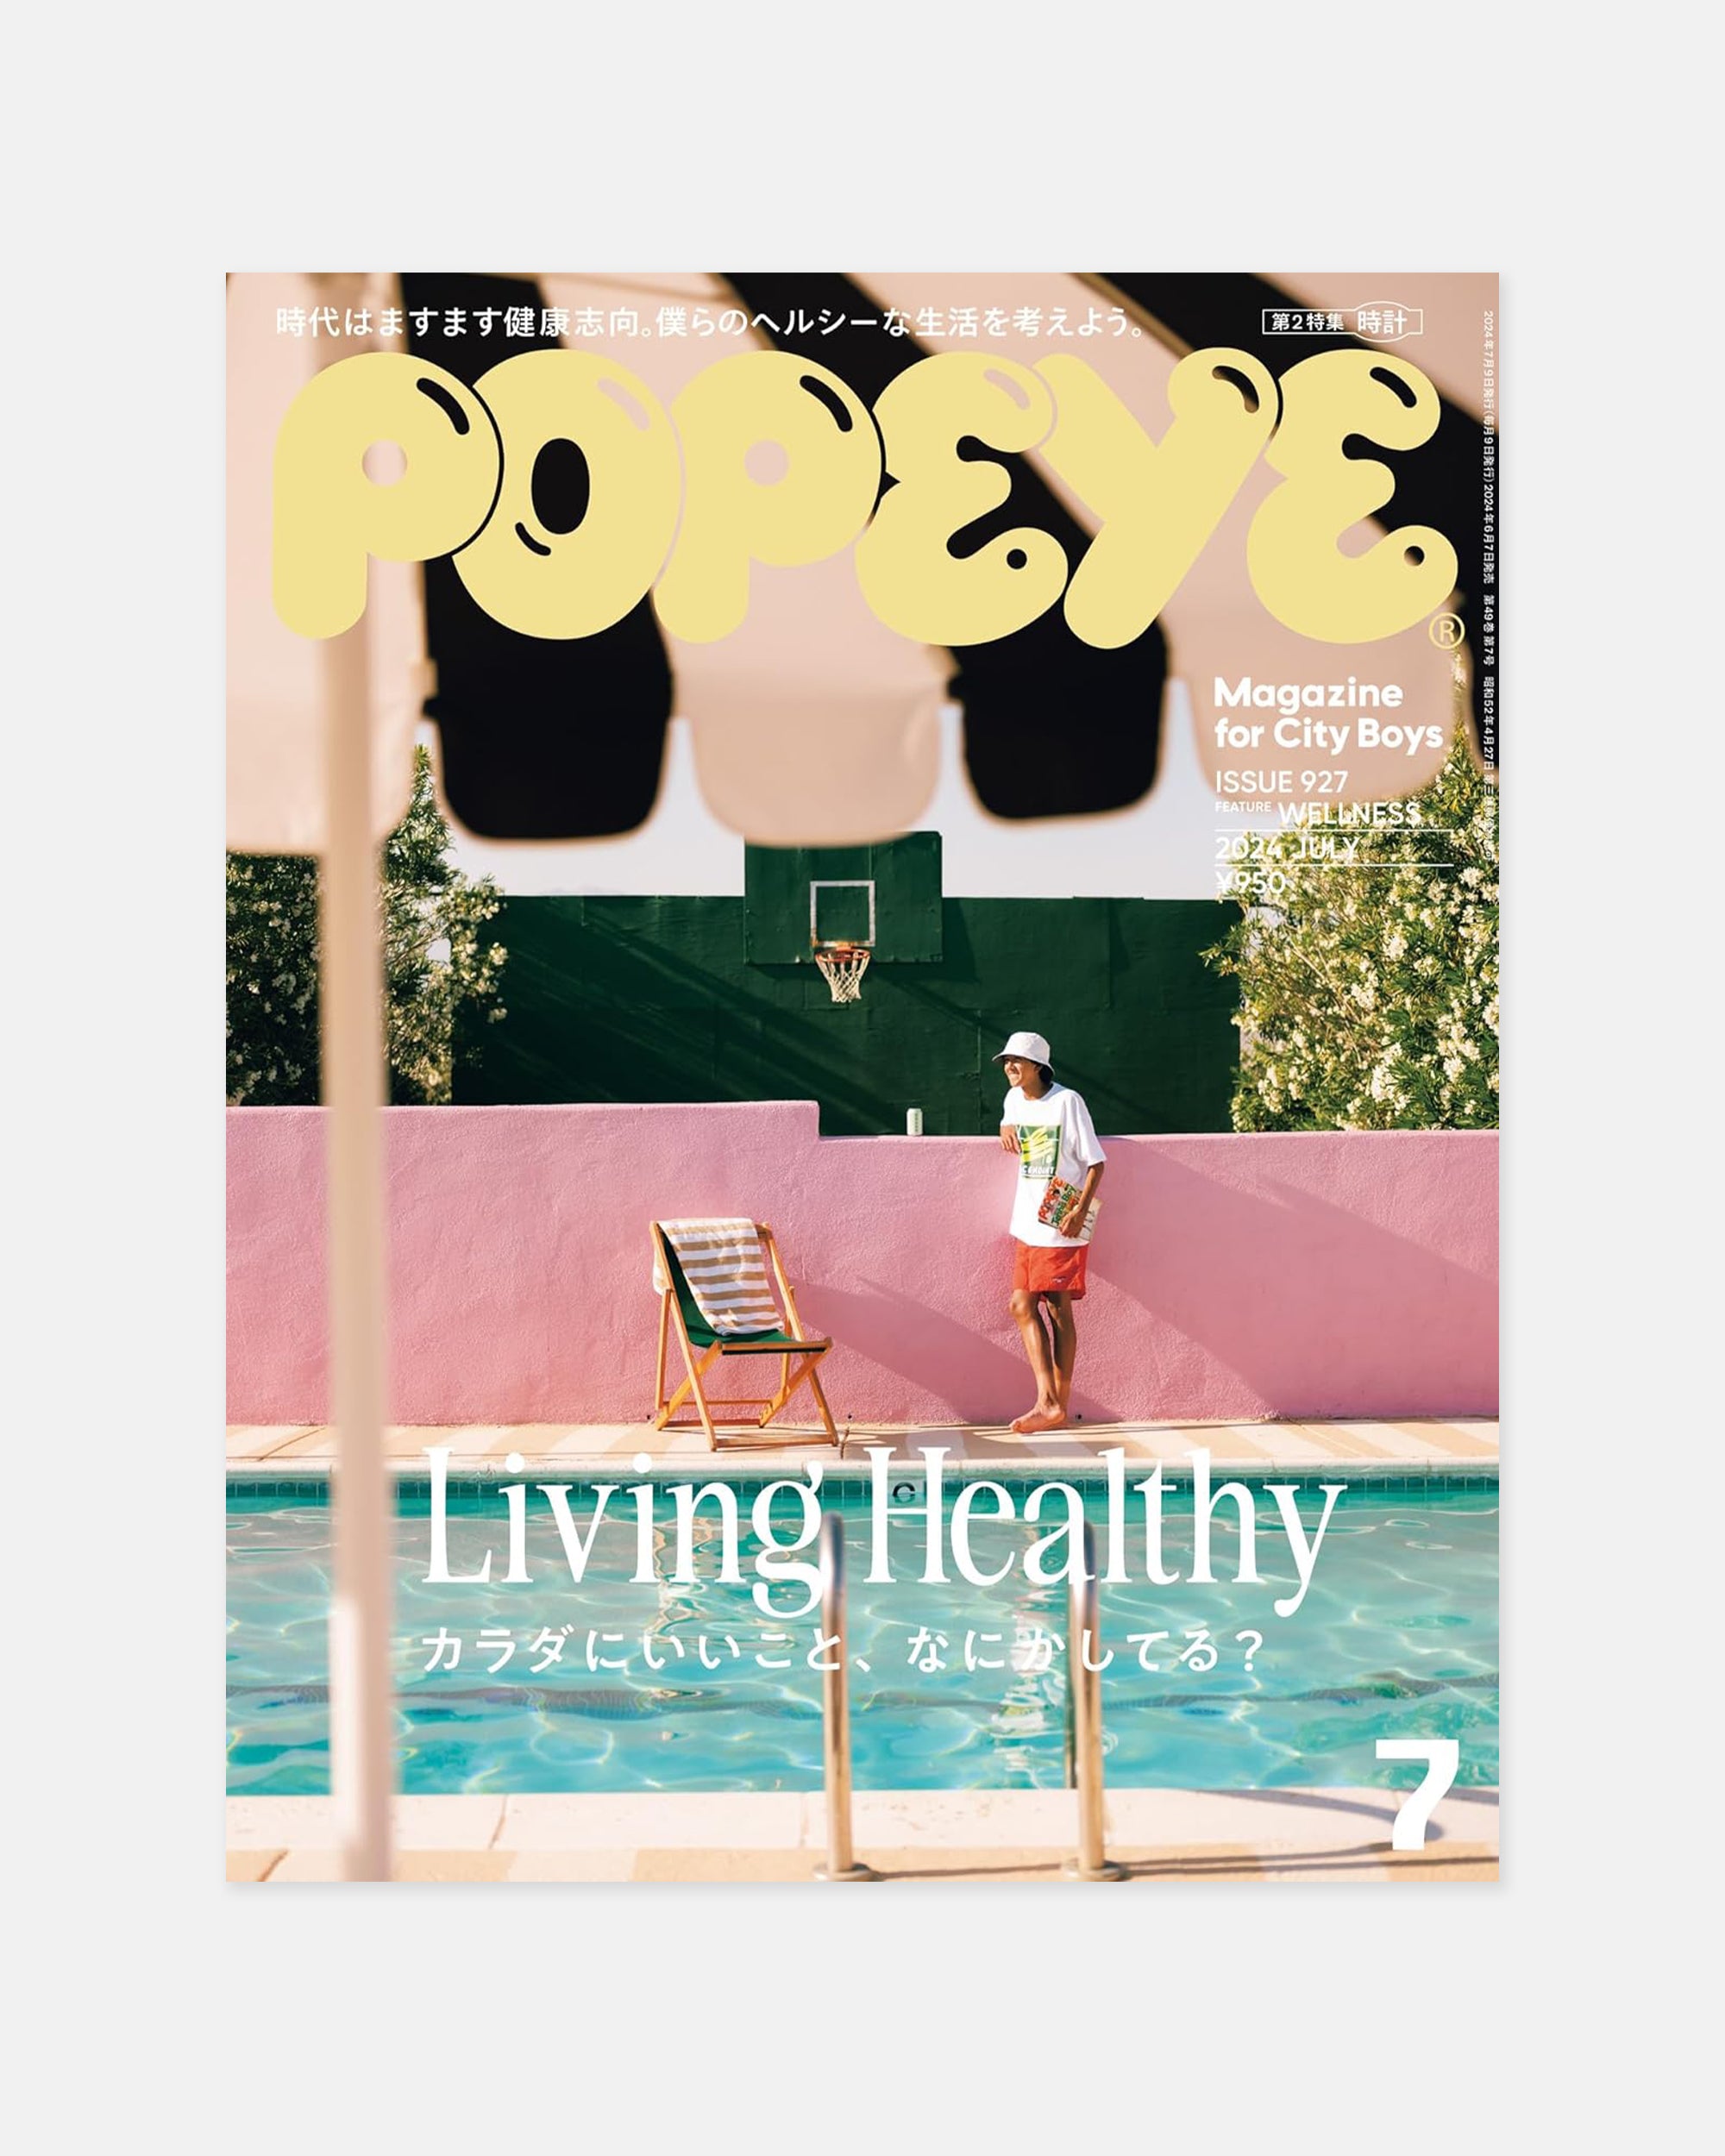 Popeye Magazine – Aigo